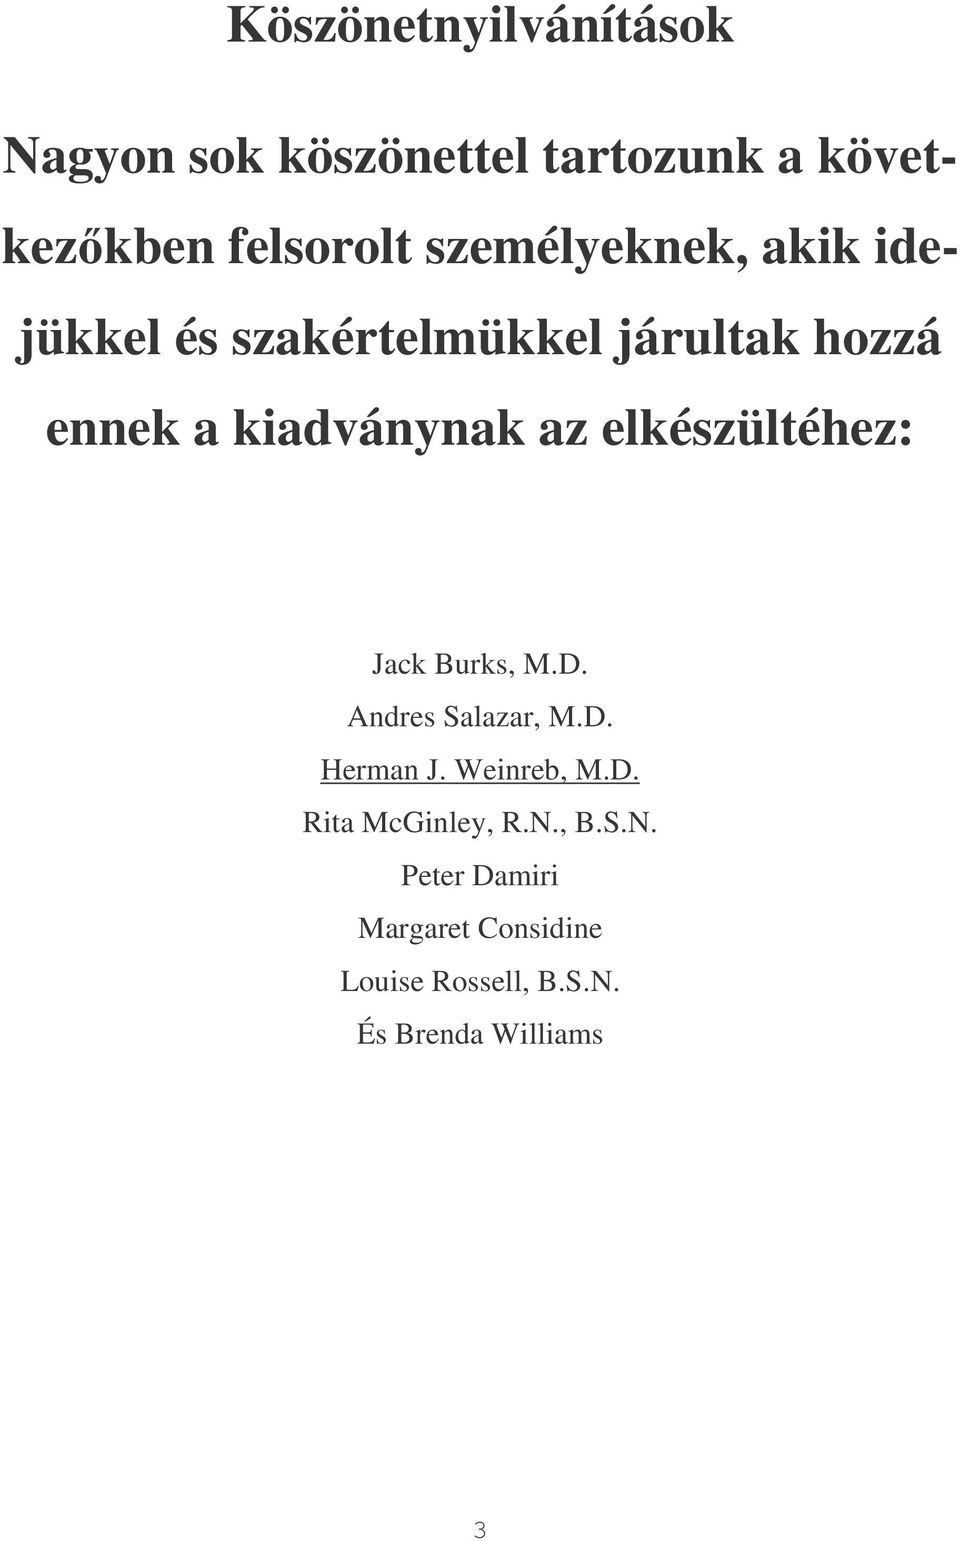 elkészültéhez: Jack Burks, M.D. Andres Salazar, M.D. Herman J. Weinreb, M.D. Rita McGinley, R.